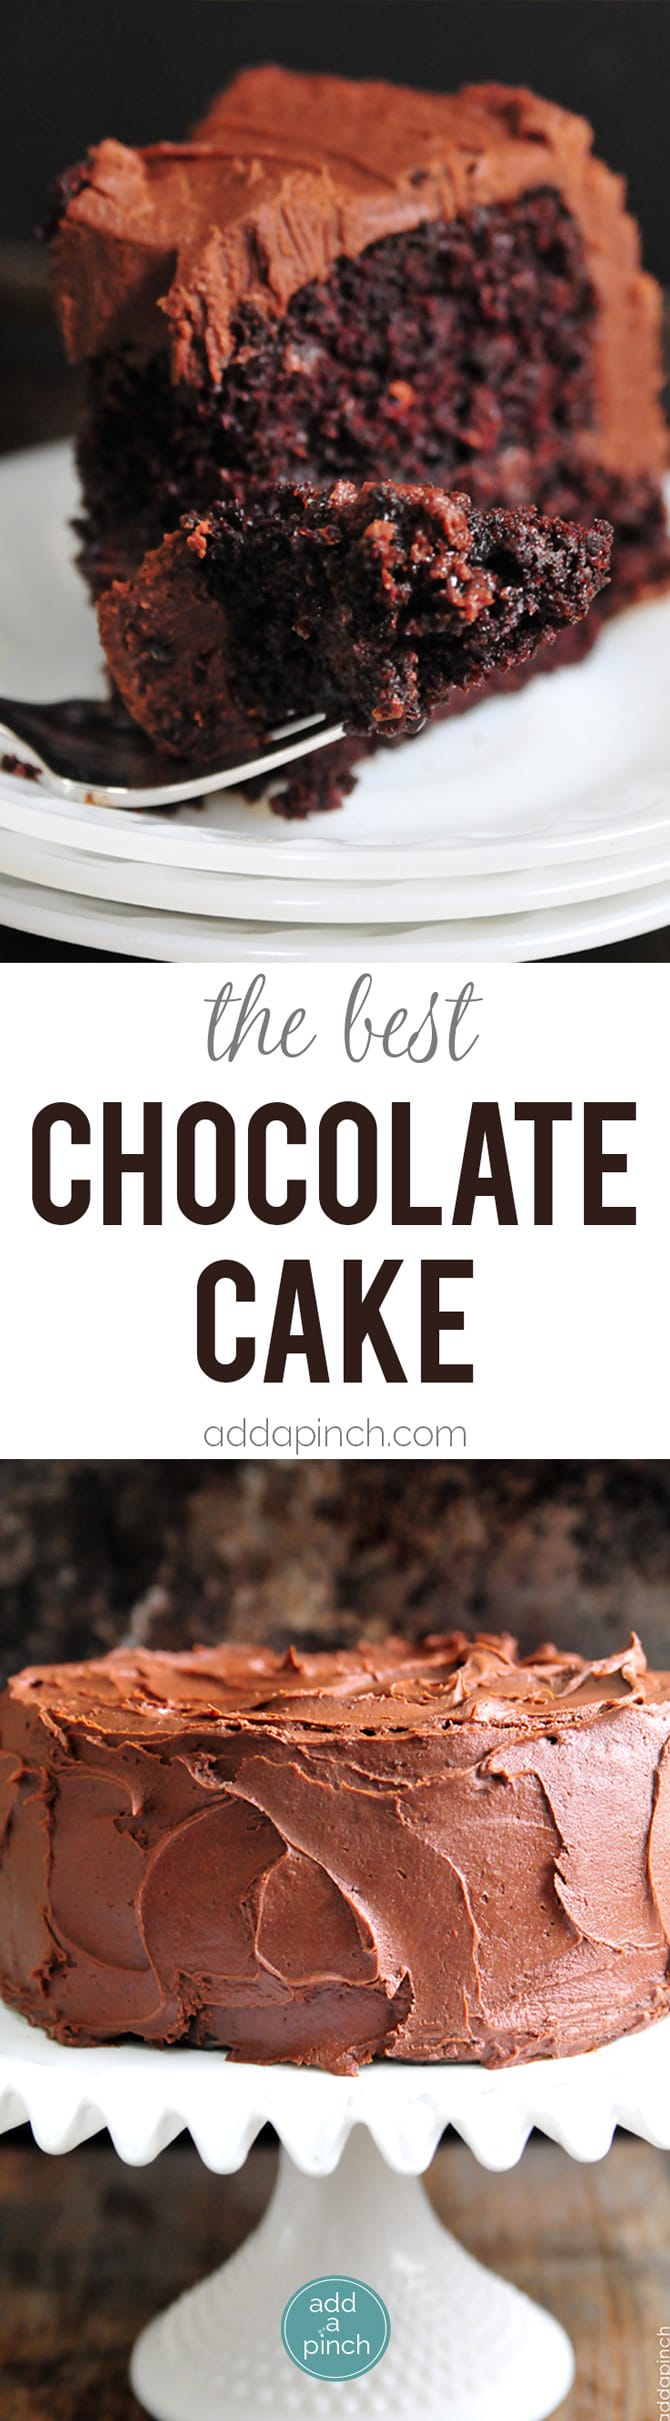 best-chocolate-cake-recipe-collage.jpg